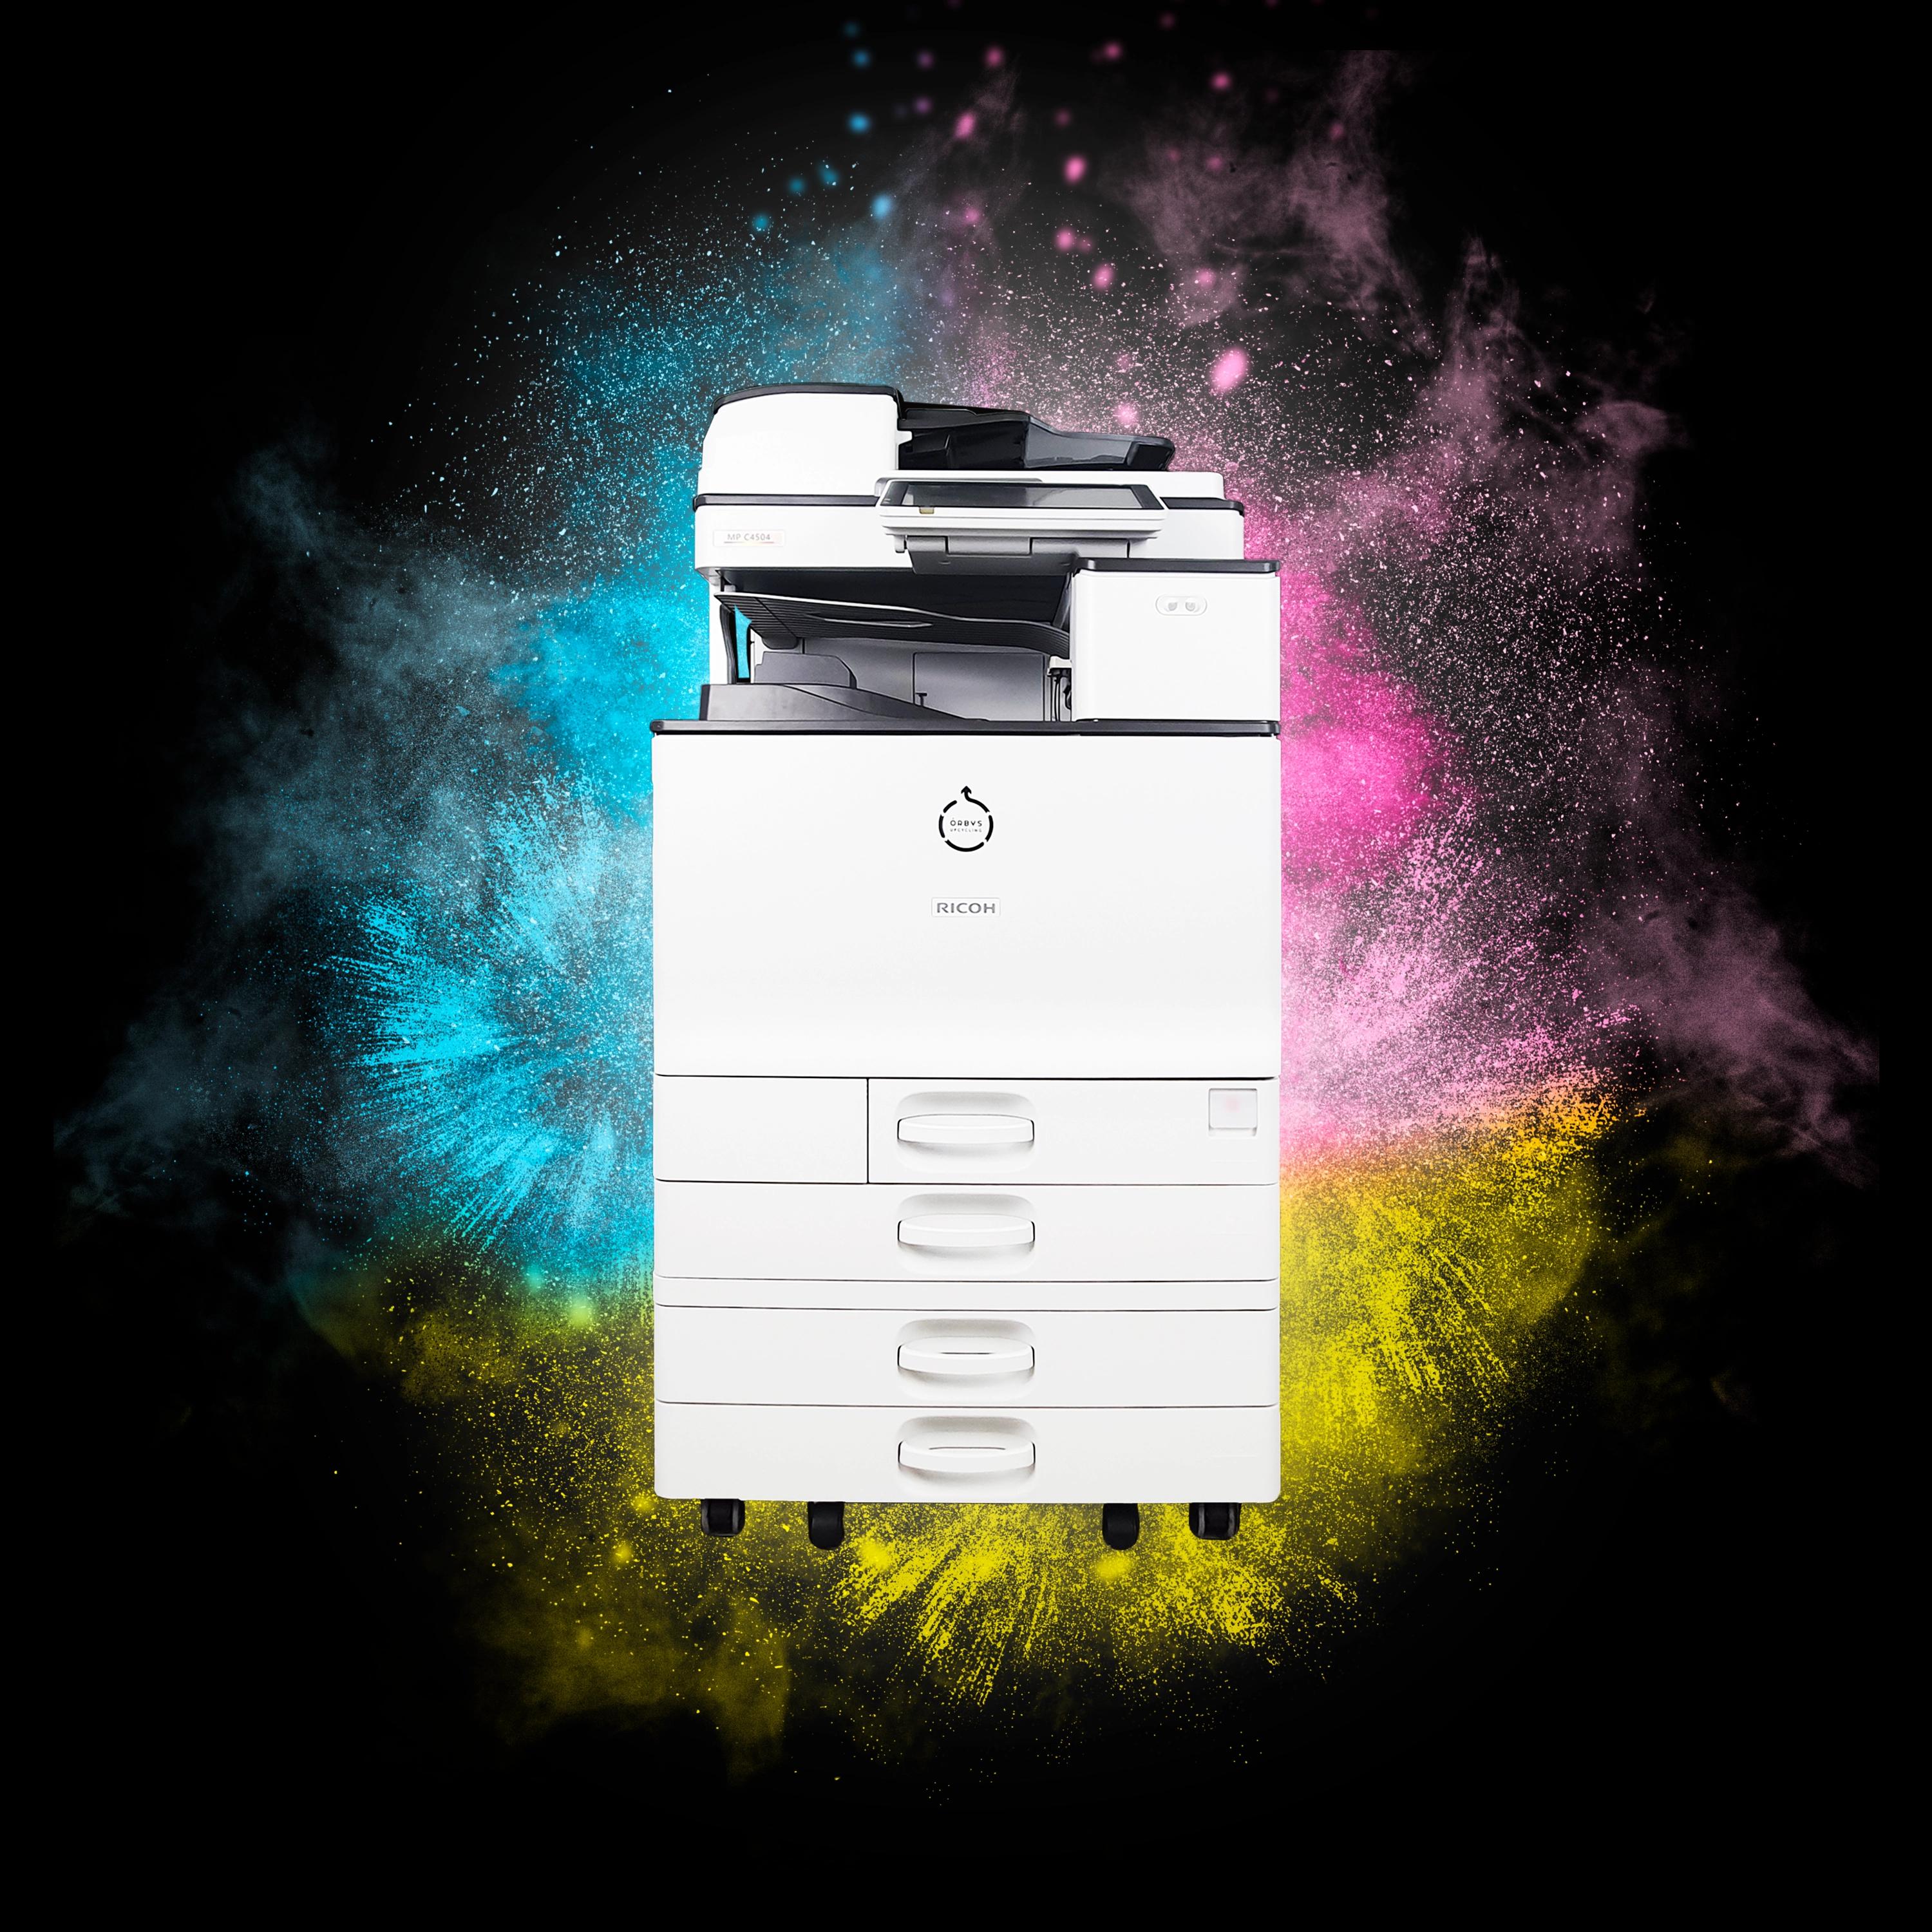 Serie 4 multifunction color laser printer